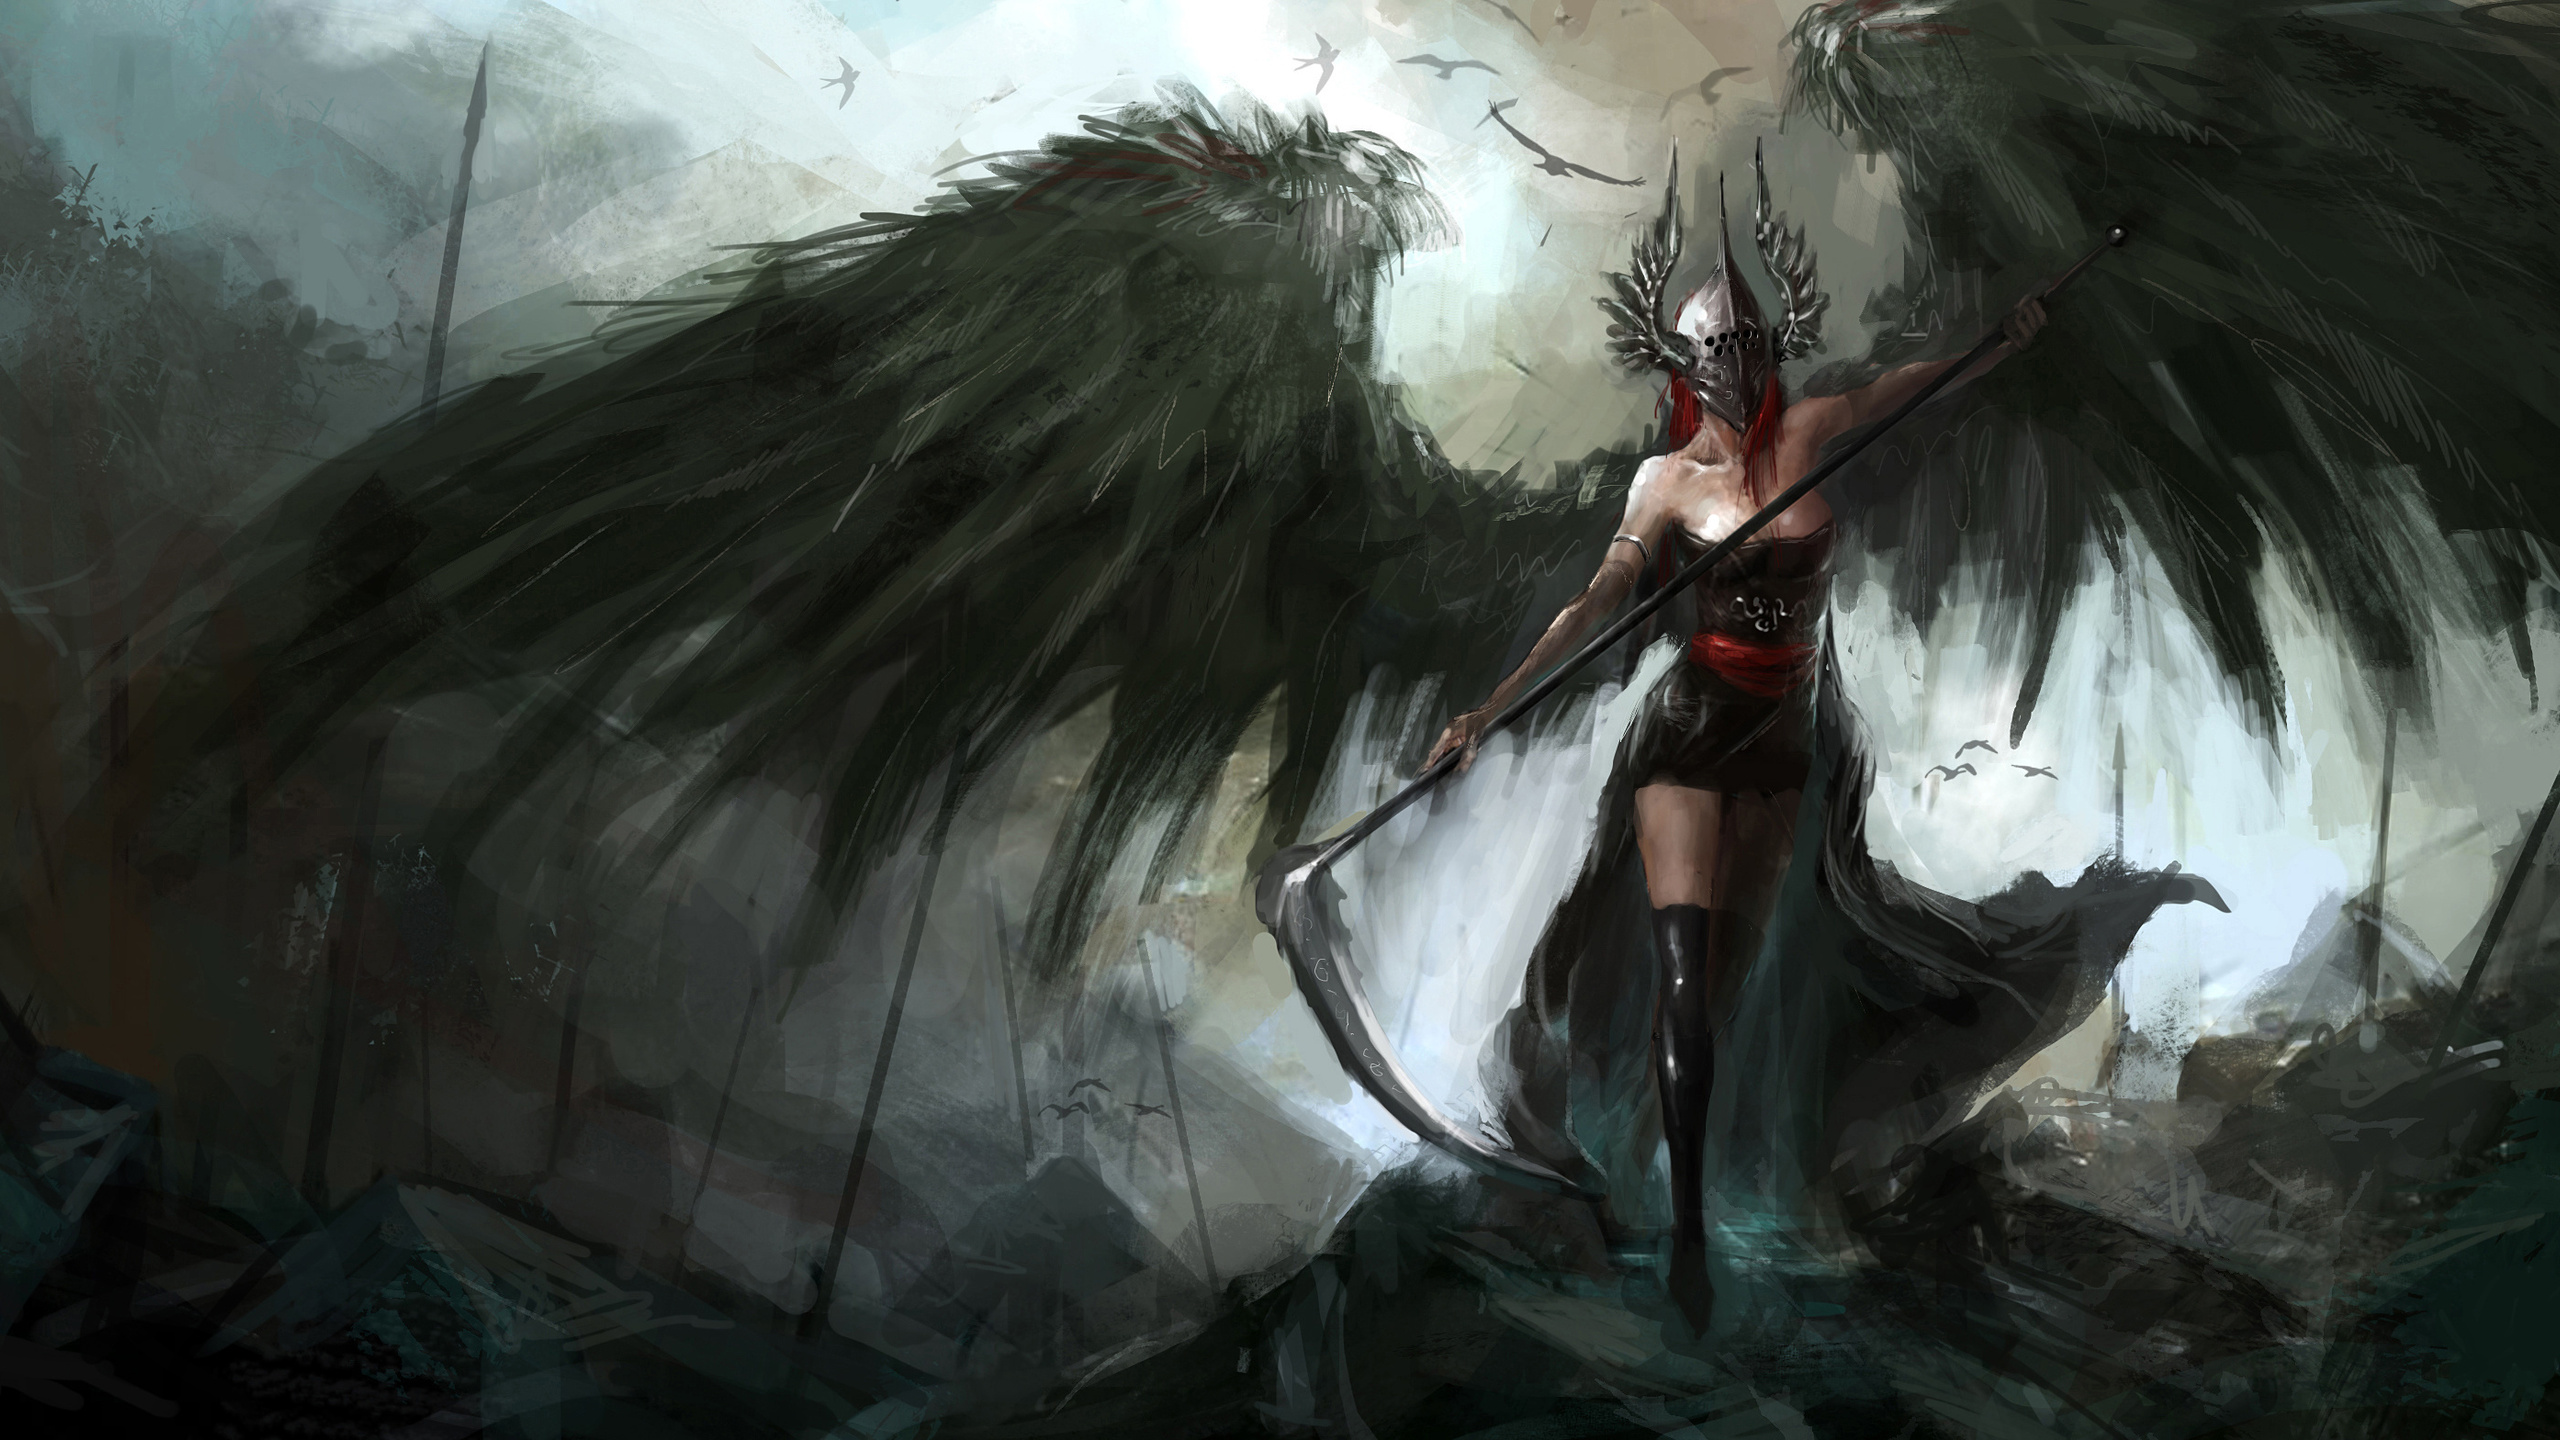 Angel Warrior Art